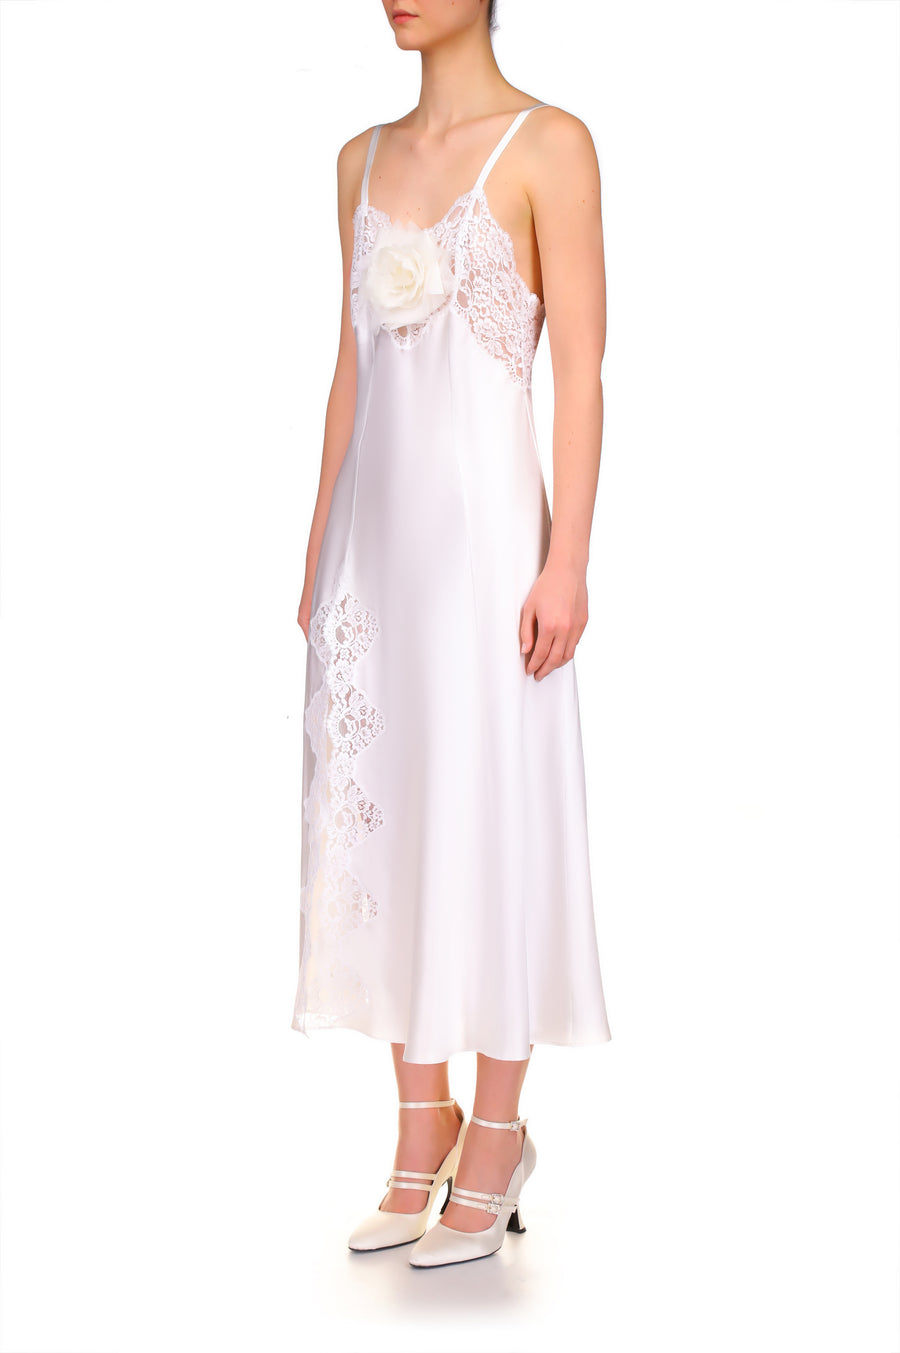 White Silk Satin And Lace Bias Slip Dress With Slit and Rose – Rodarte